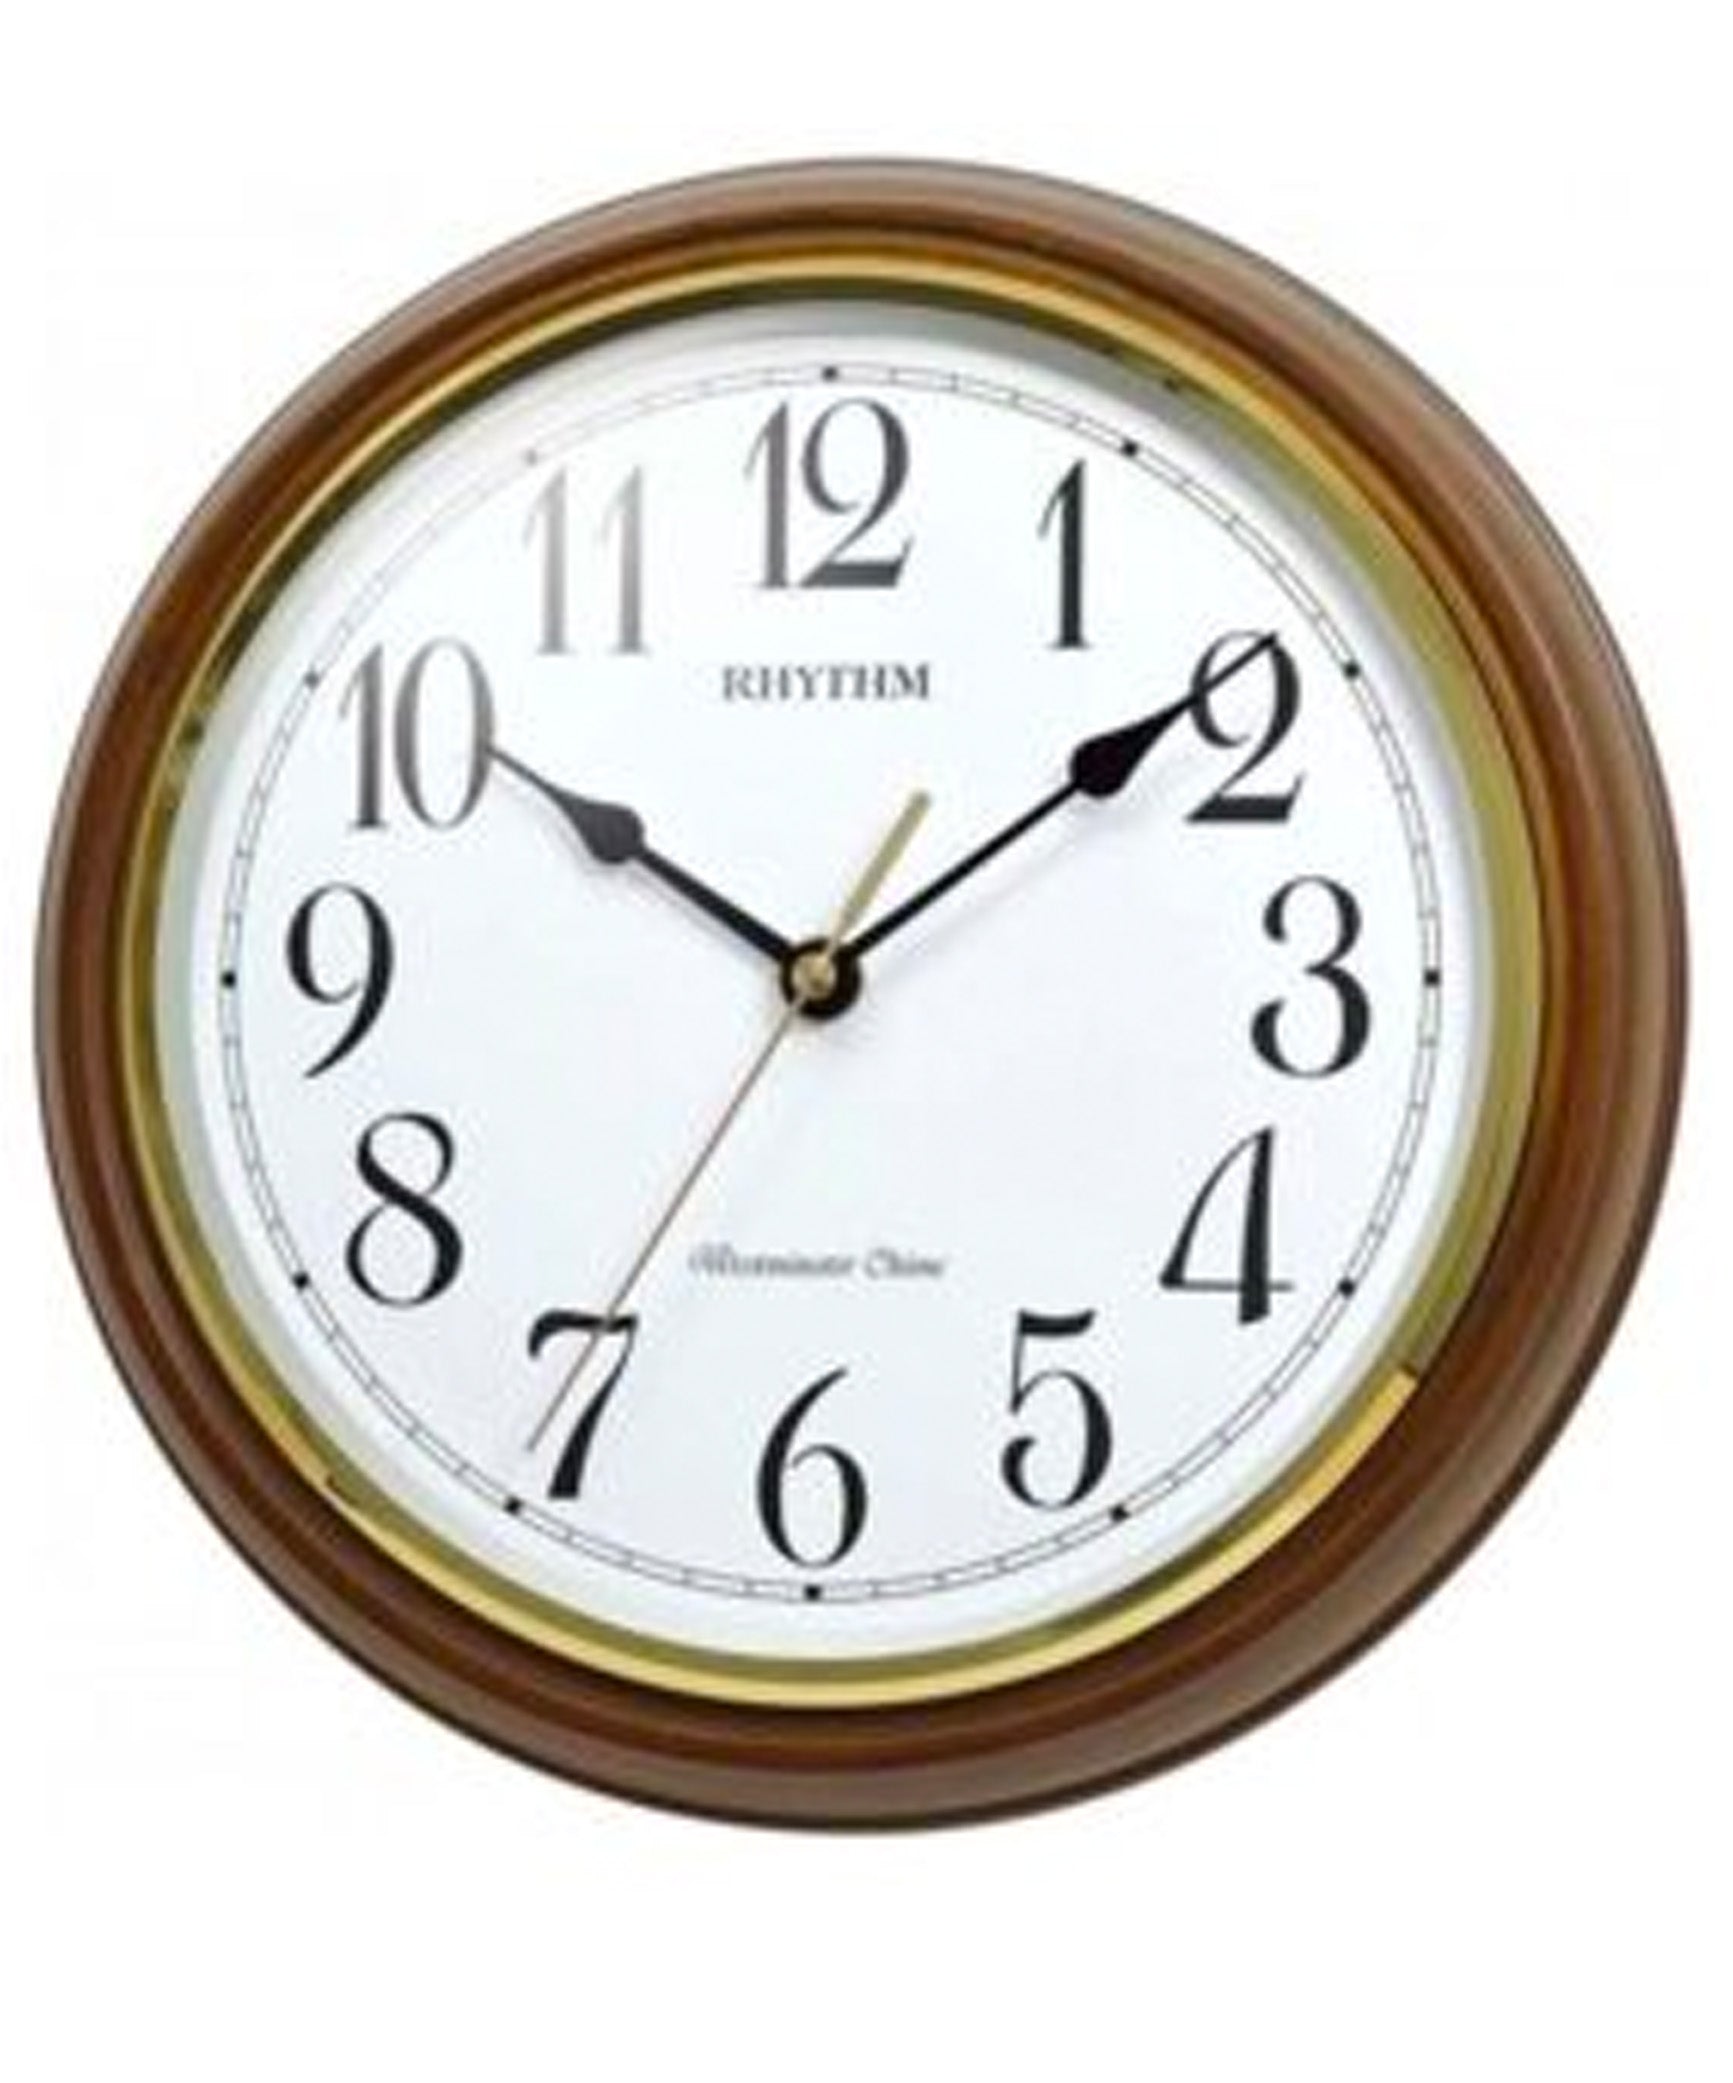 Rhythm Wall Clock Analog CMG938NR06 | stylish watch | accurate timekeeping | wall clock | round clock | Casio watch | wall watch | home décor | timepiece | Halabh.com